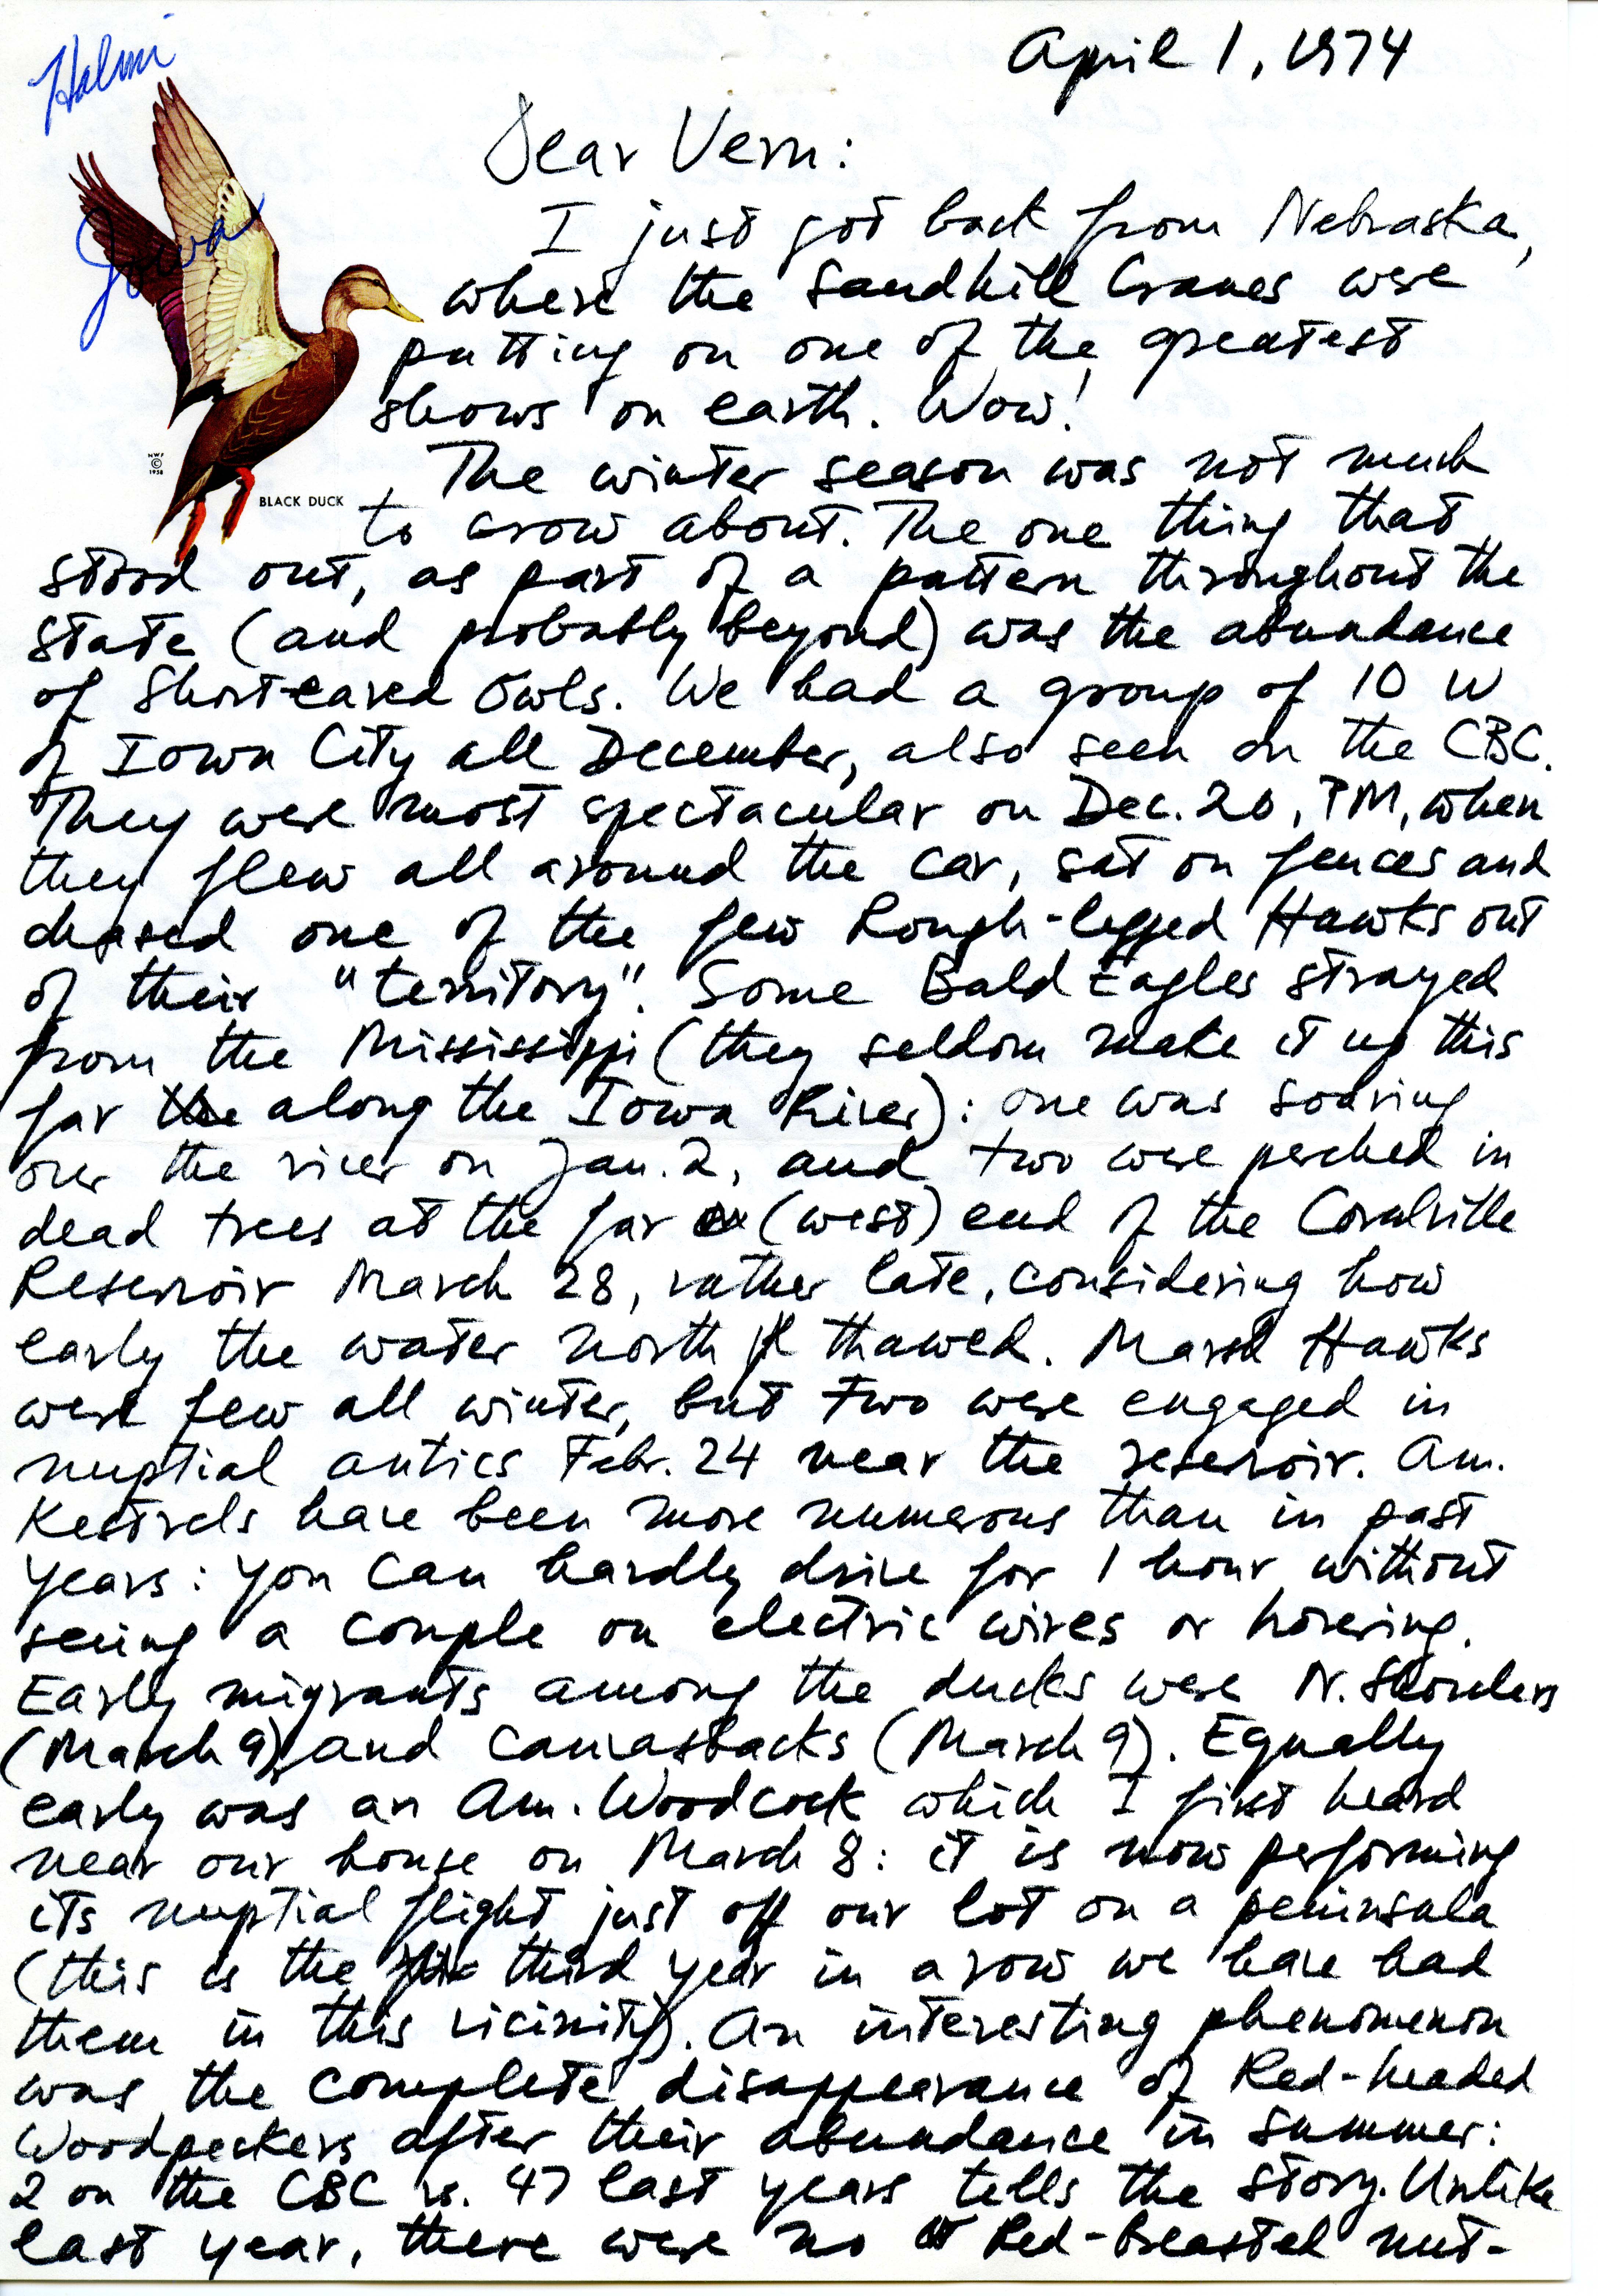 Nicholas S. Halmi letter to Vernon M. Kleen regarding birds sighted around Iowa City during the winter season, April 1, 1974